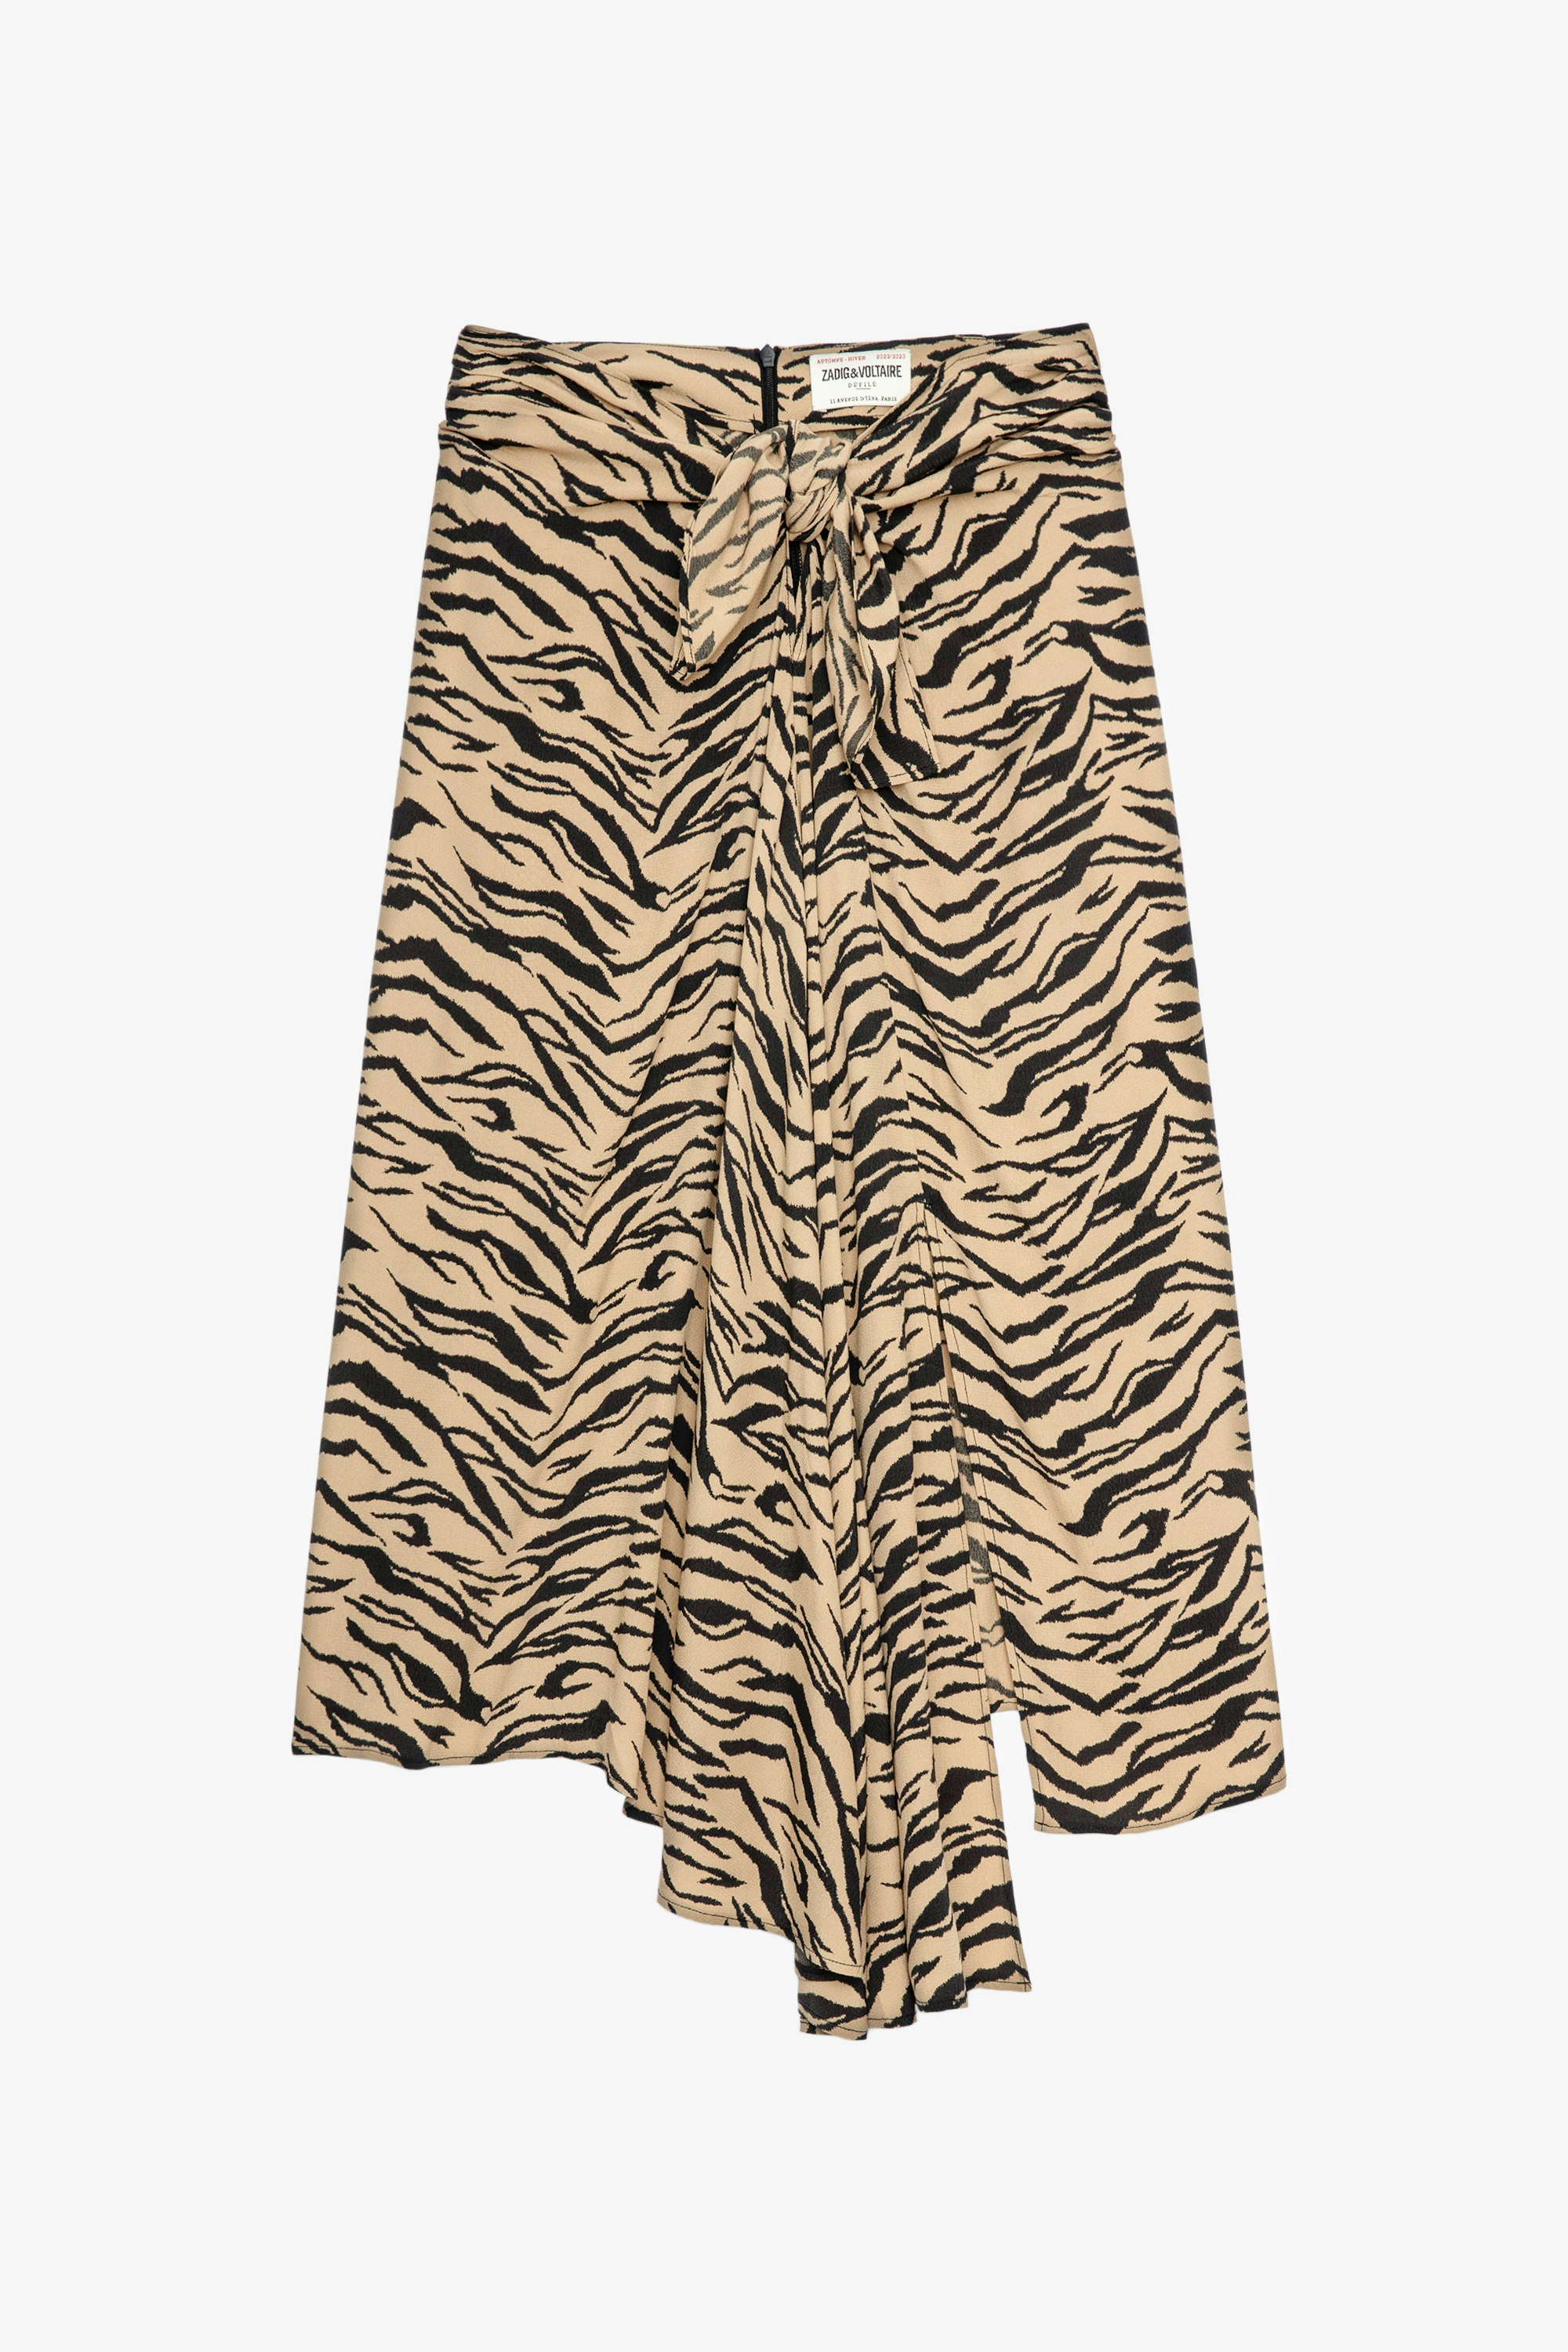 Janais Tiger スカート Women's Naturel tied midi skirt with tiger print